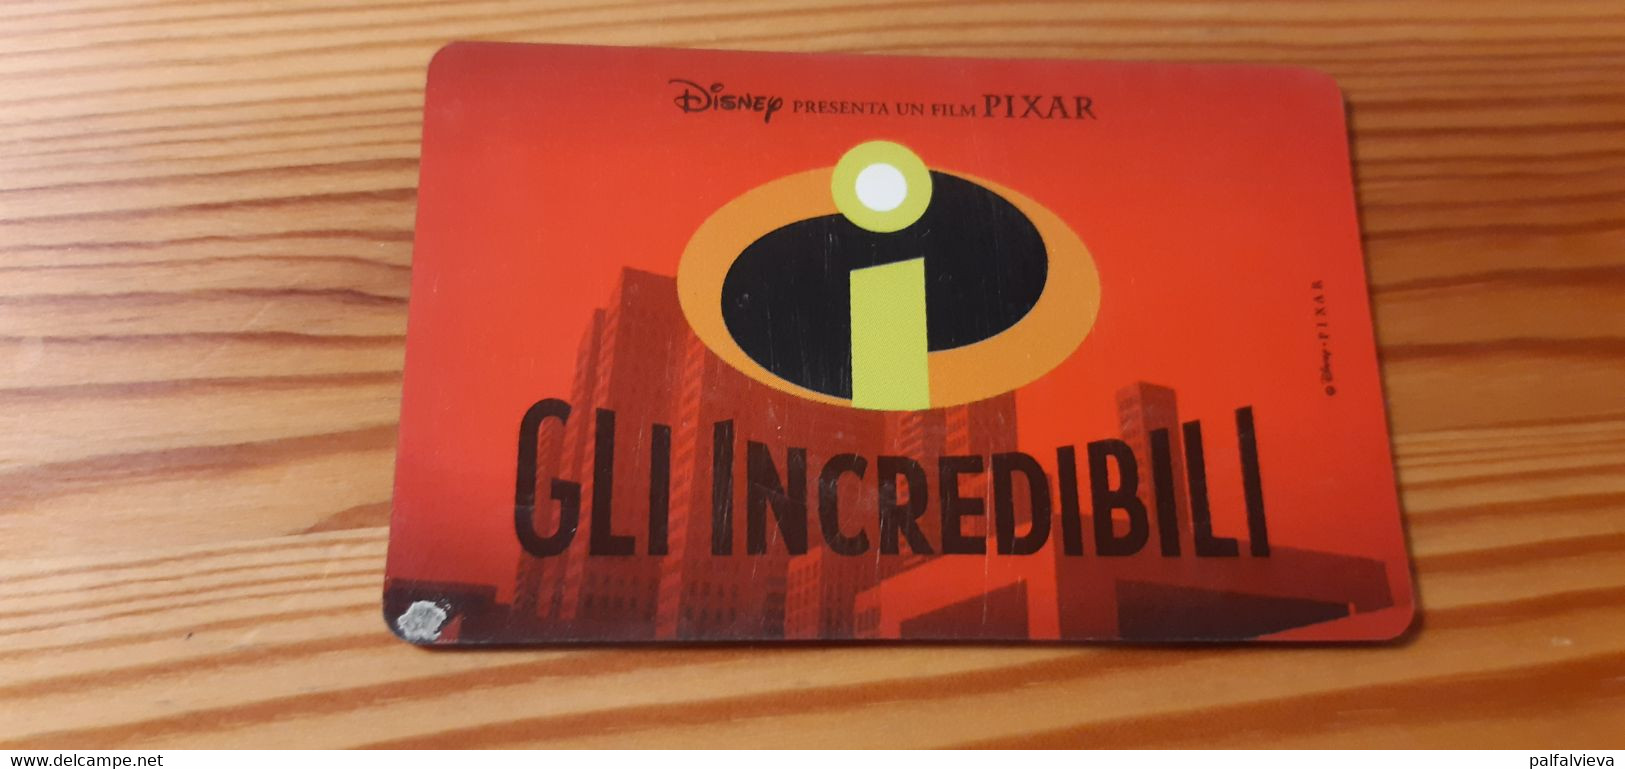 Walt Disney Trading Card - The Incredibles - Disney